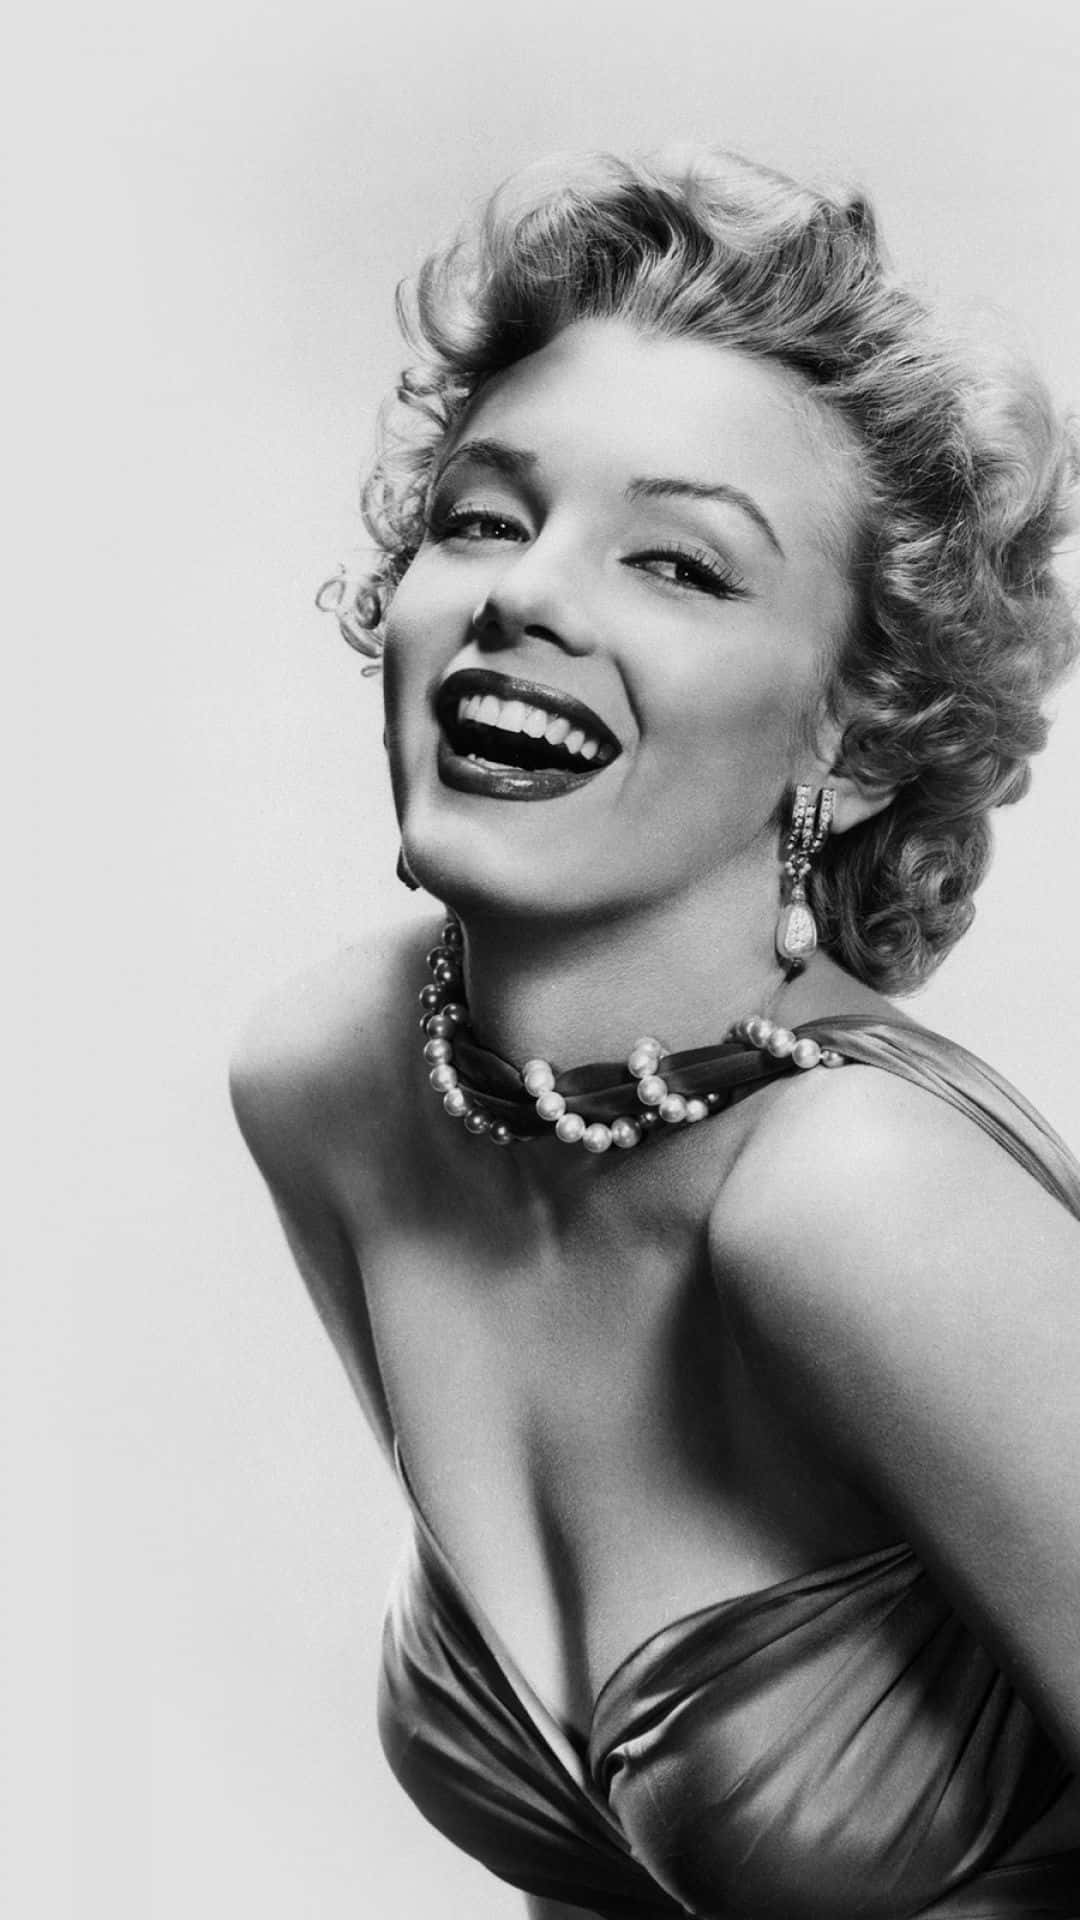 Desfrutede Um Momento De Glamour Clássico De Hollywood Com A Beleza Lendária De Marilyn Monroe. Papel de Parede